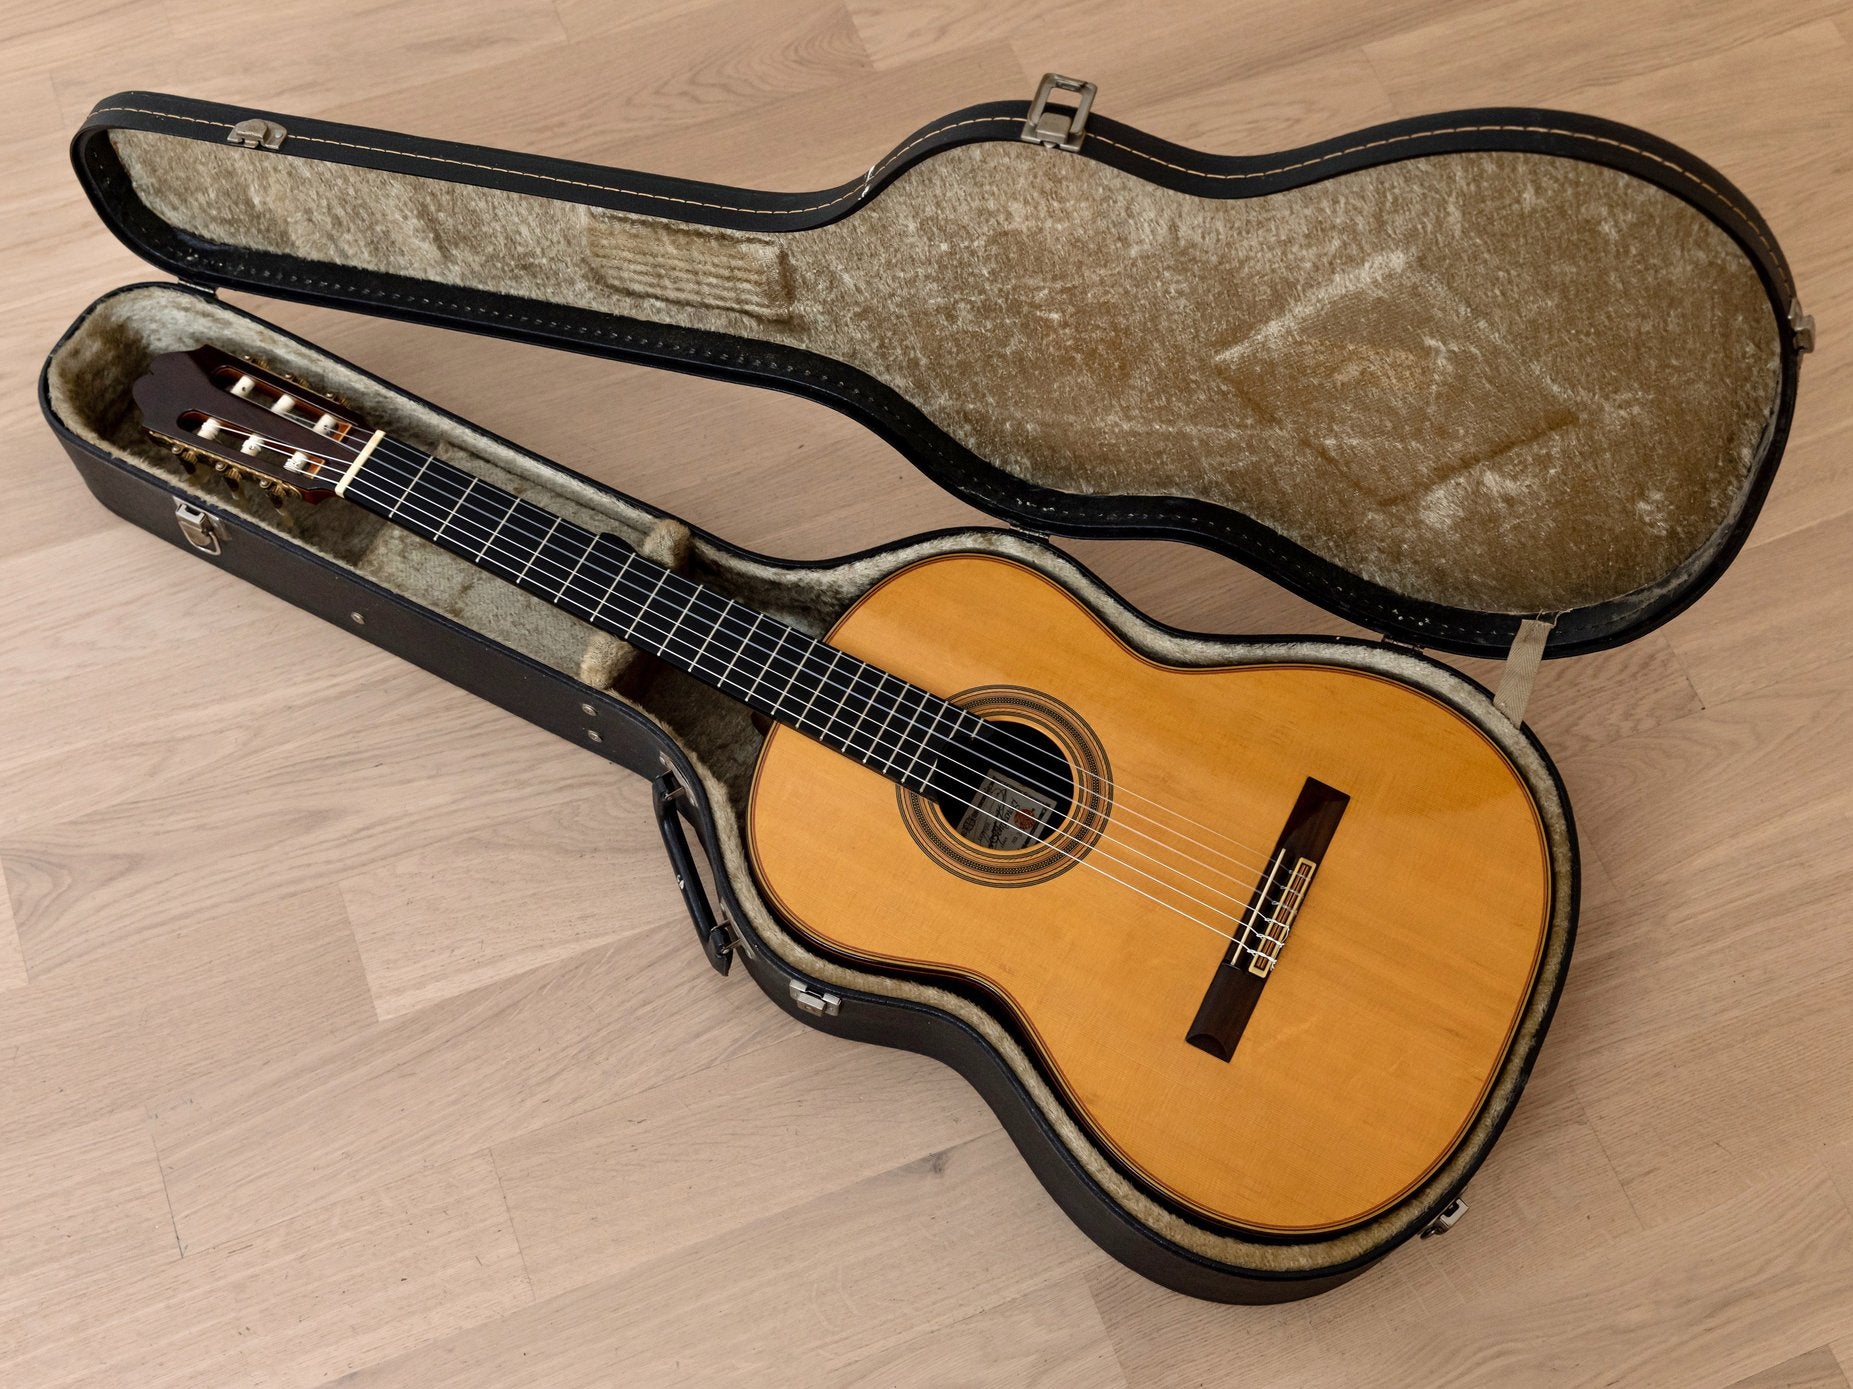 1985 Kazuo Ichiyanagi Model 30 Vintage Classical Guitar w/ Case